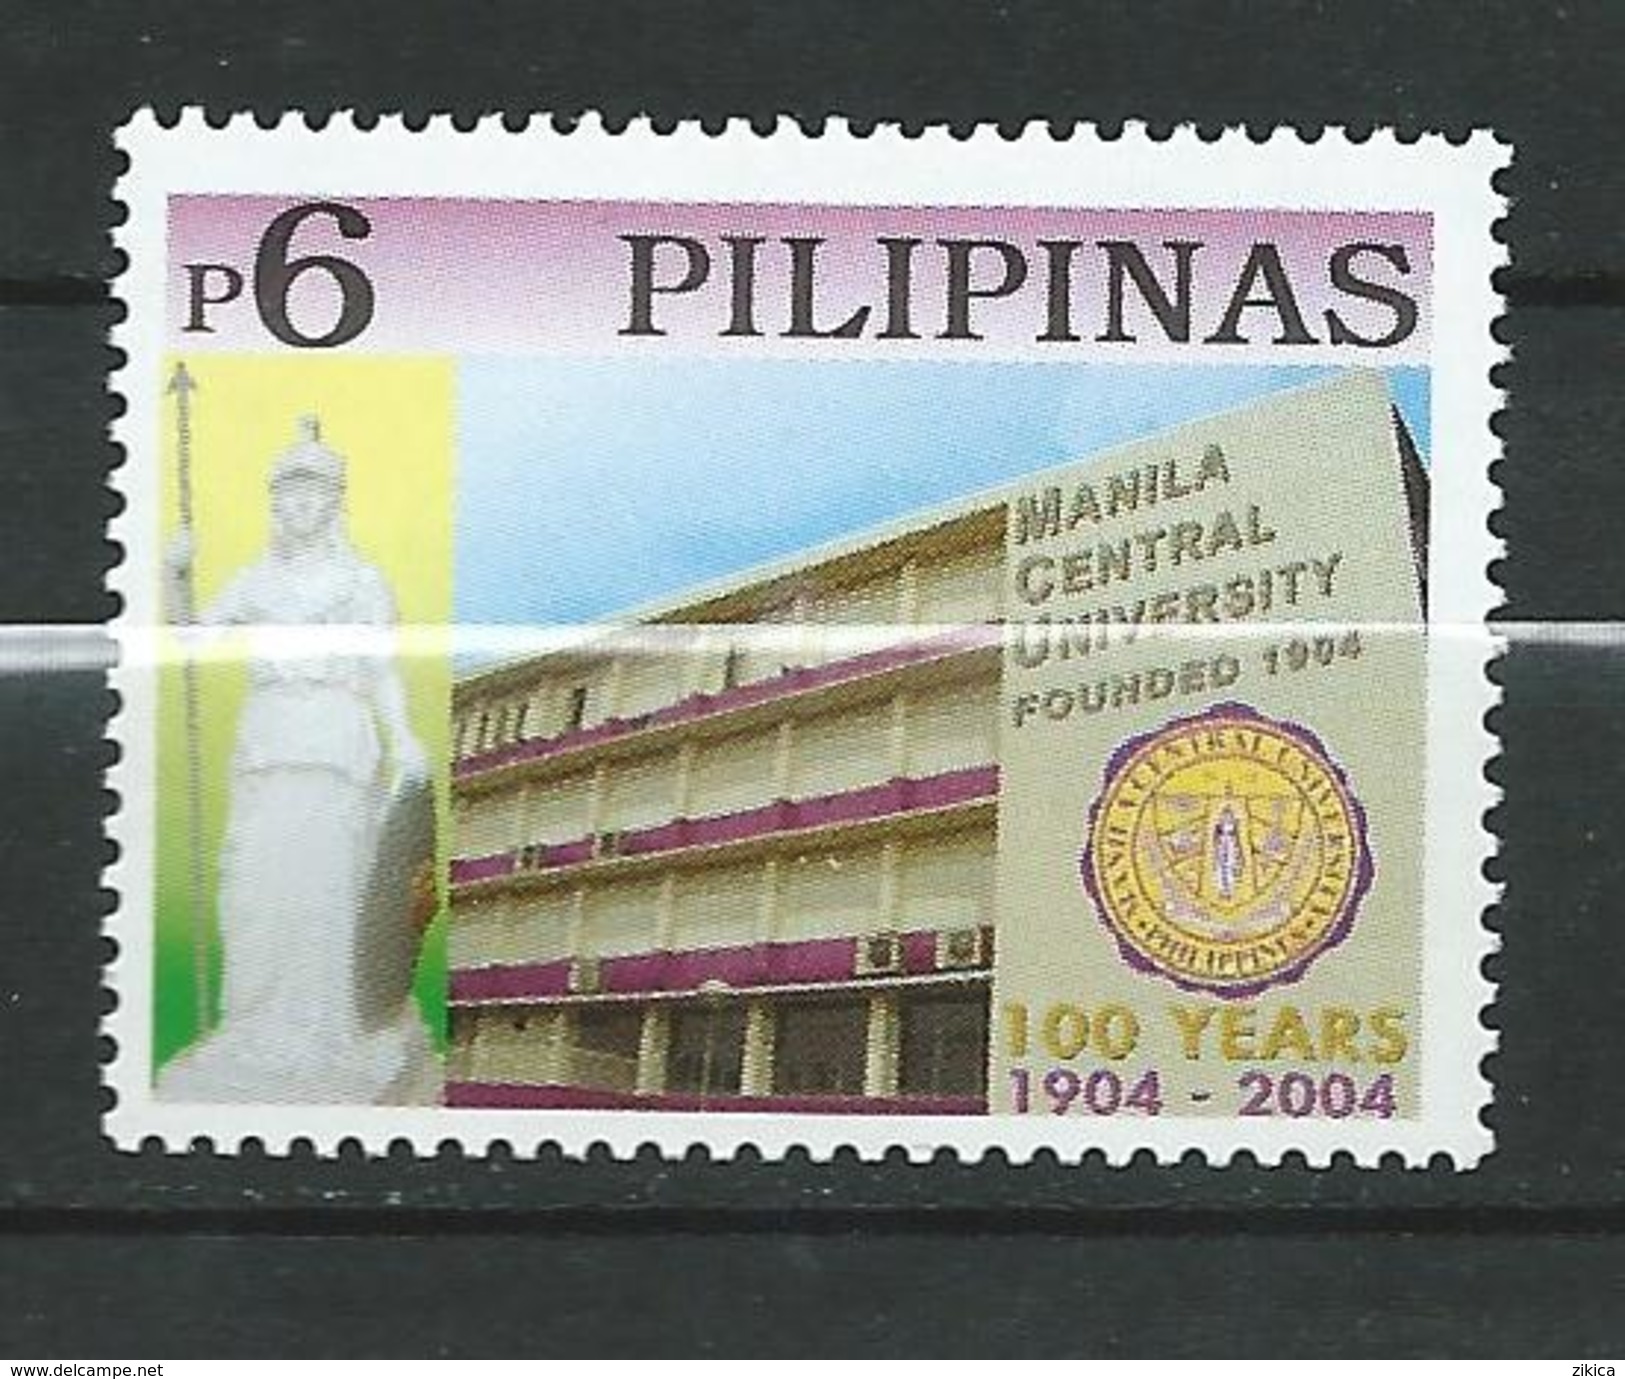 Philippines 2004 The 100th Anniversary Of Manila University.MNH - Philippines